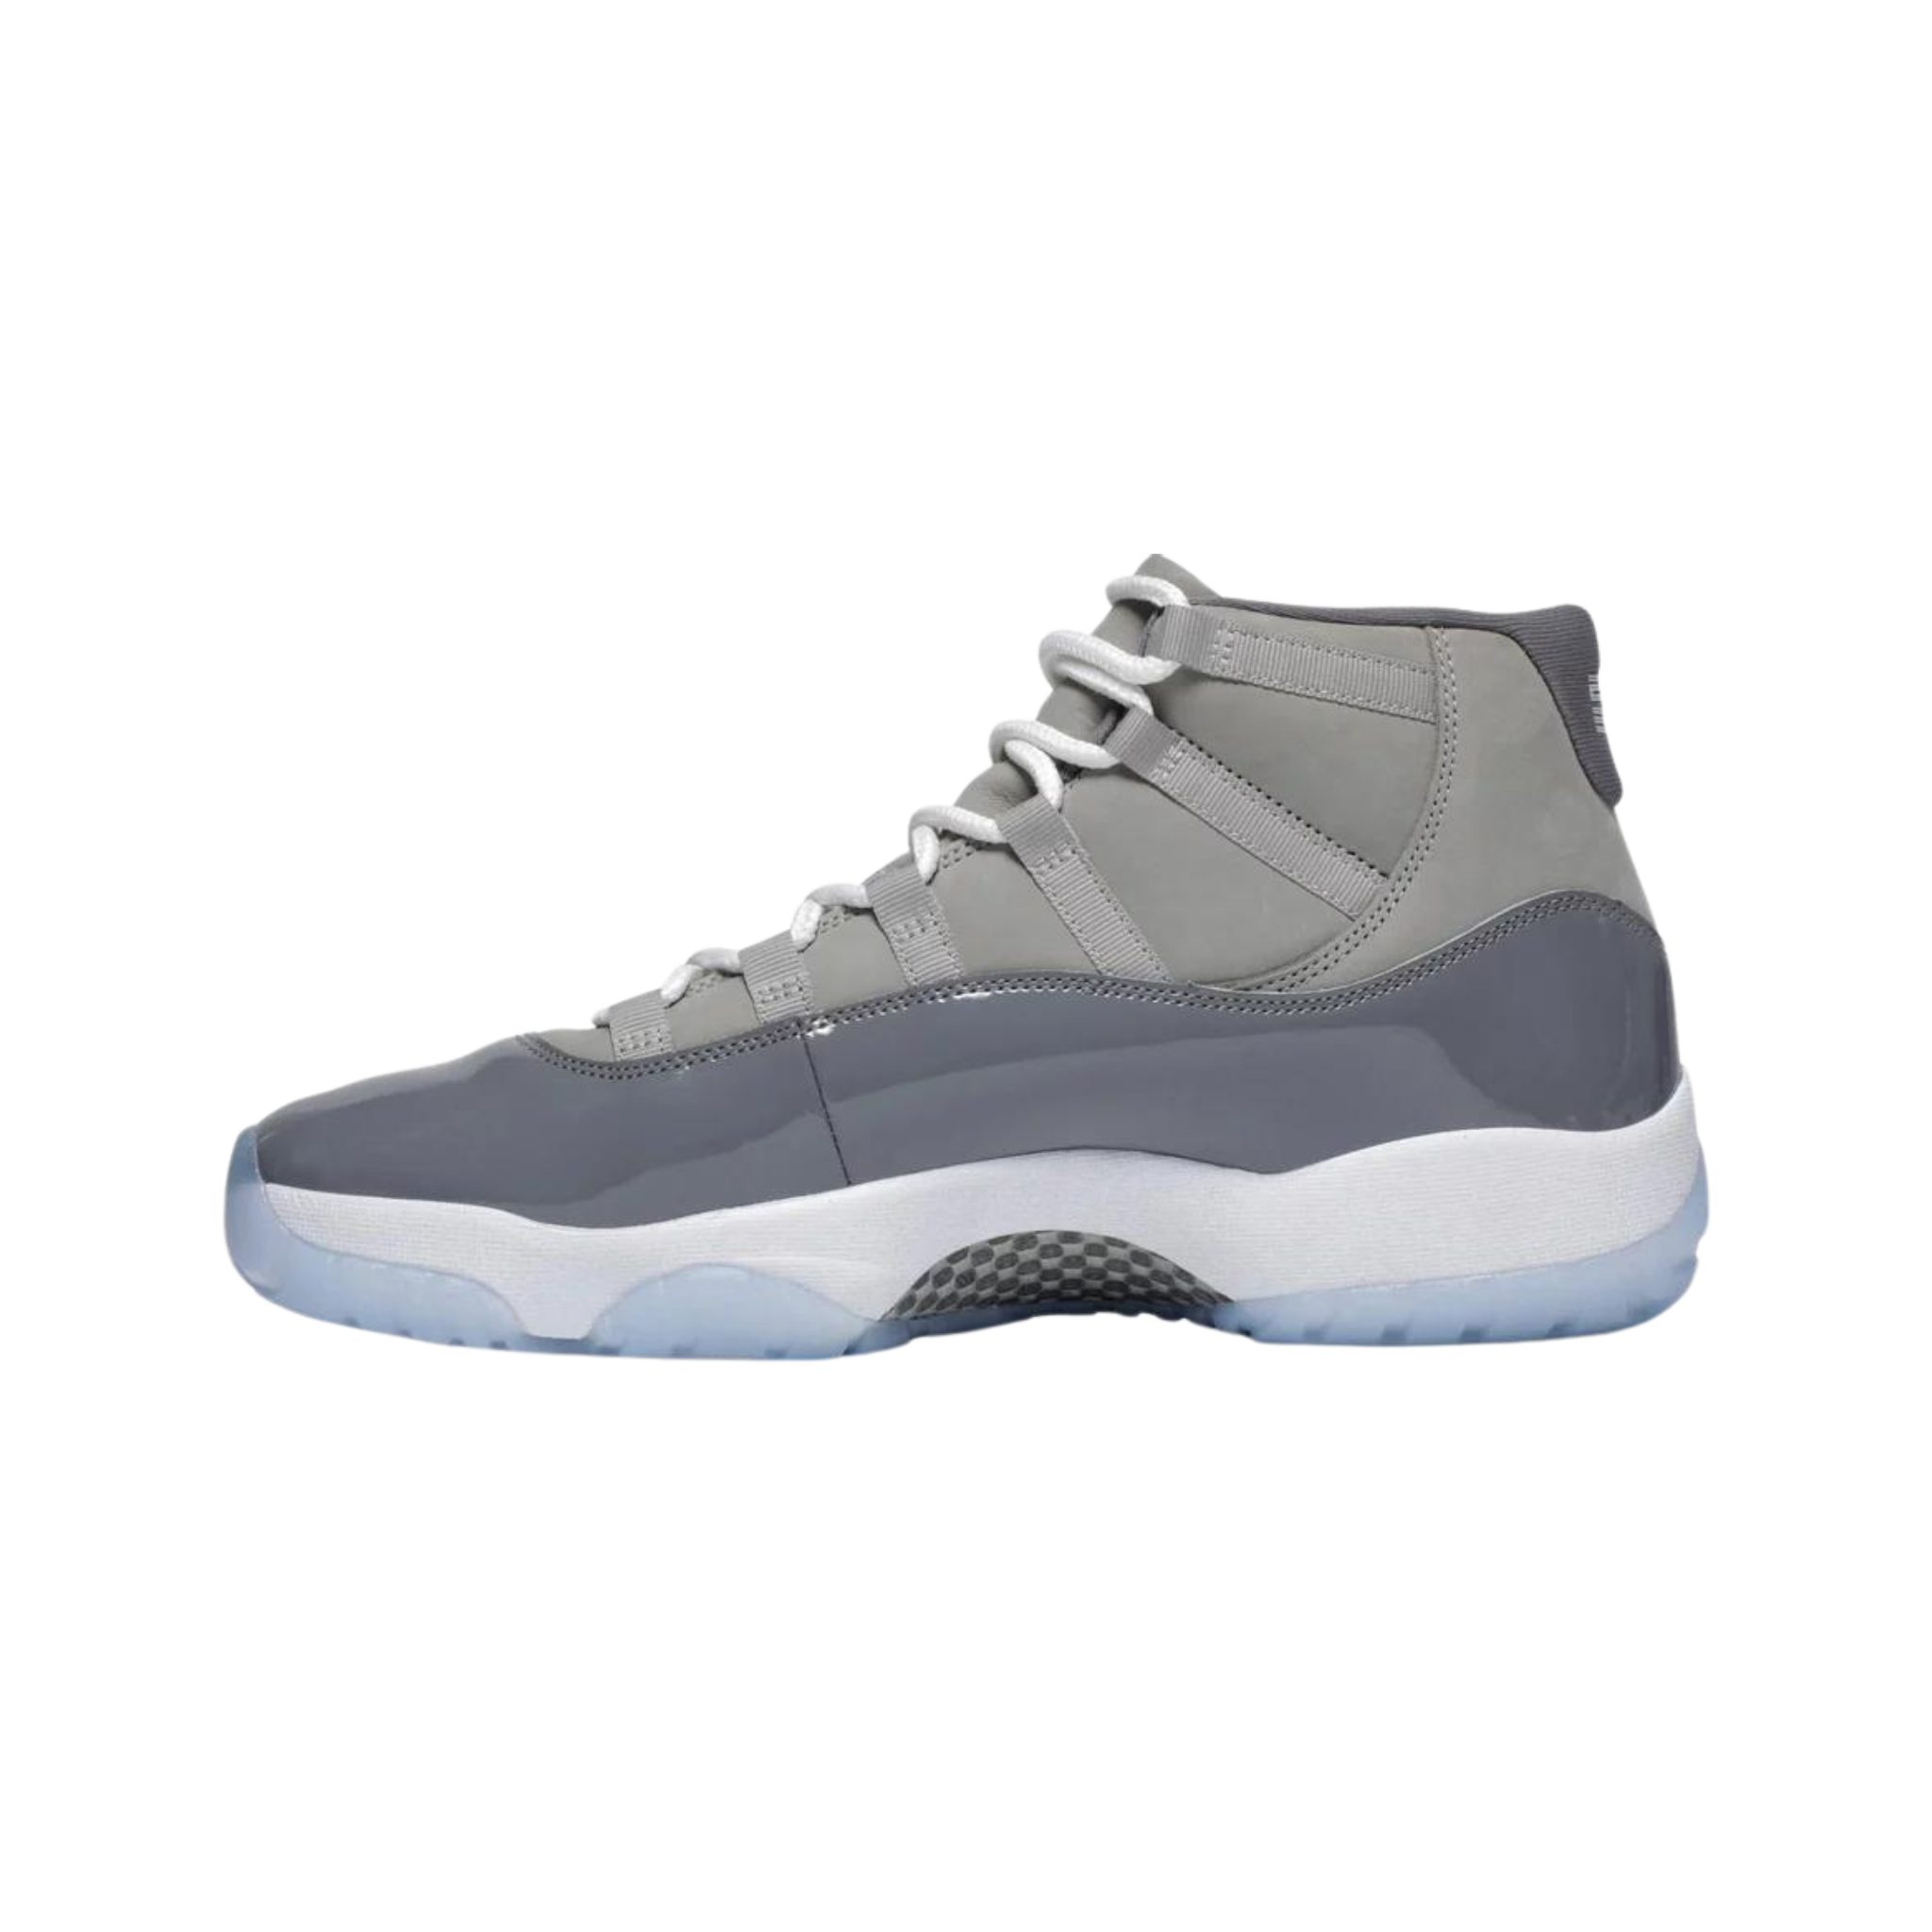 Jordan 11 Retro Cool Gray (2021)